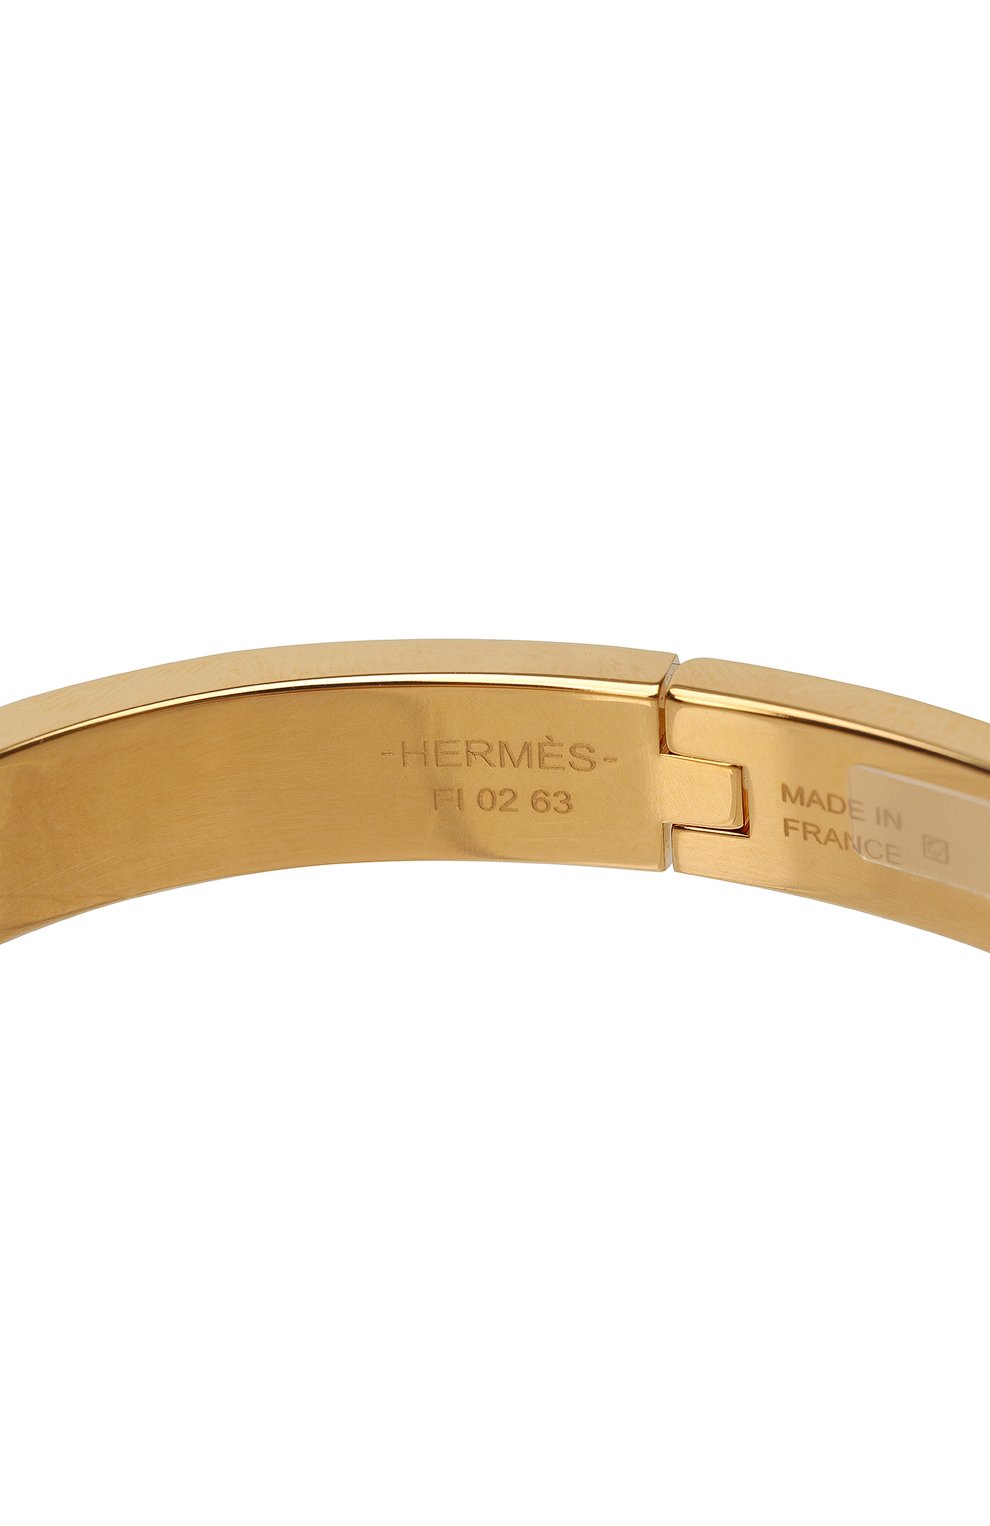 Браслет Mini Clic Chaine d'Ancre | Hermes | Золотой - 3